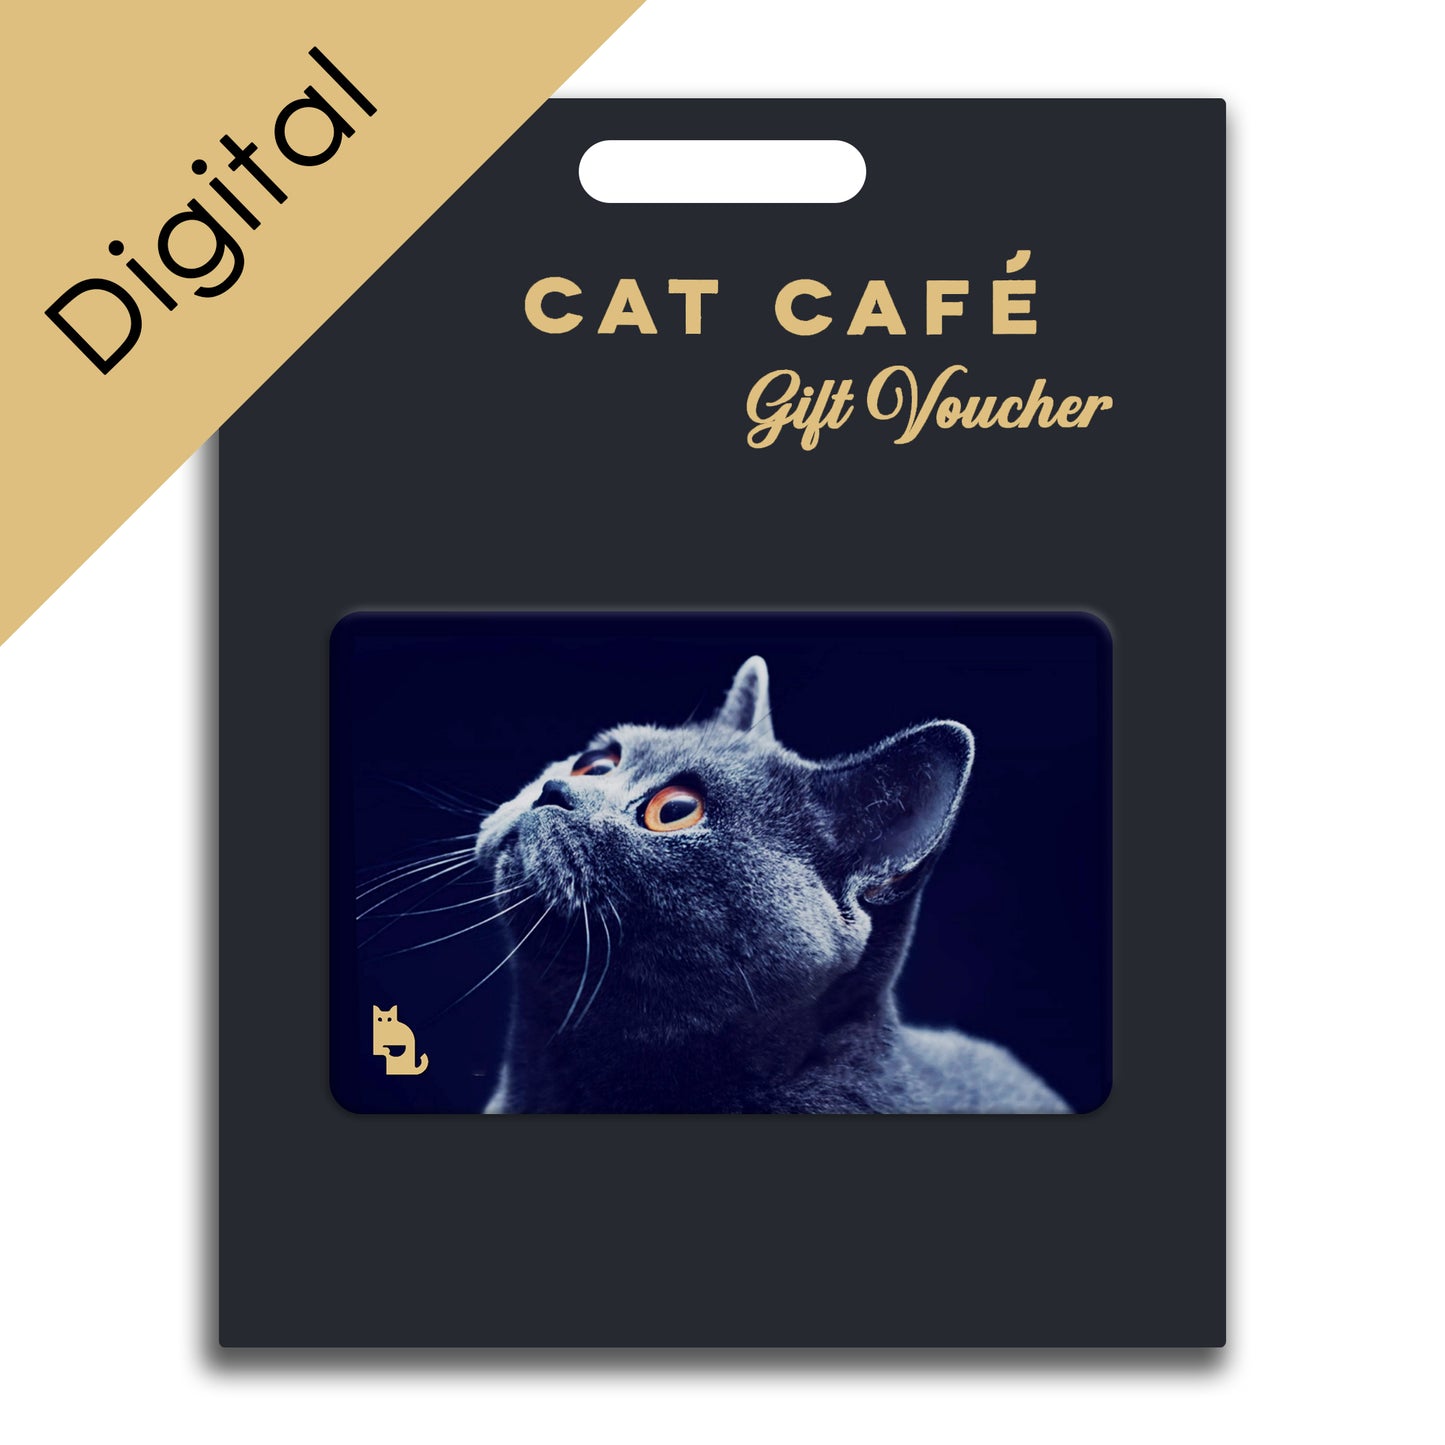 Cat Cafe Liverpool Gift Voucher - Digital Version